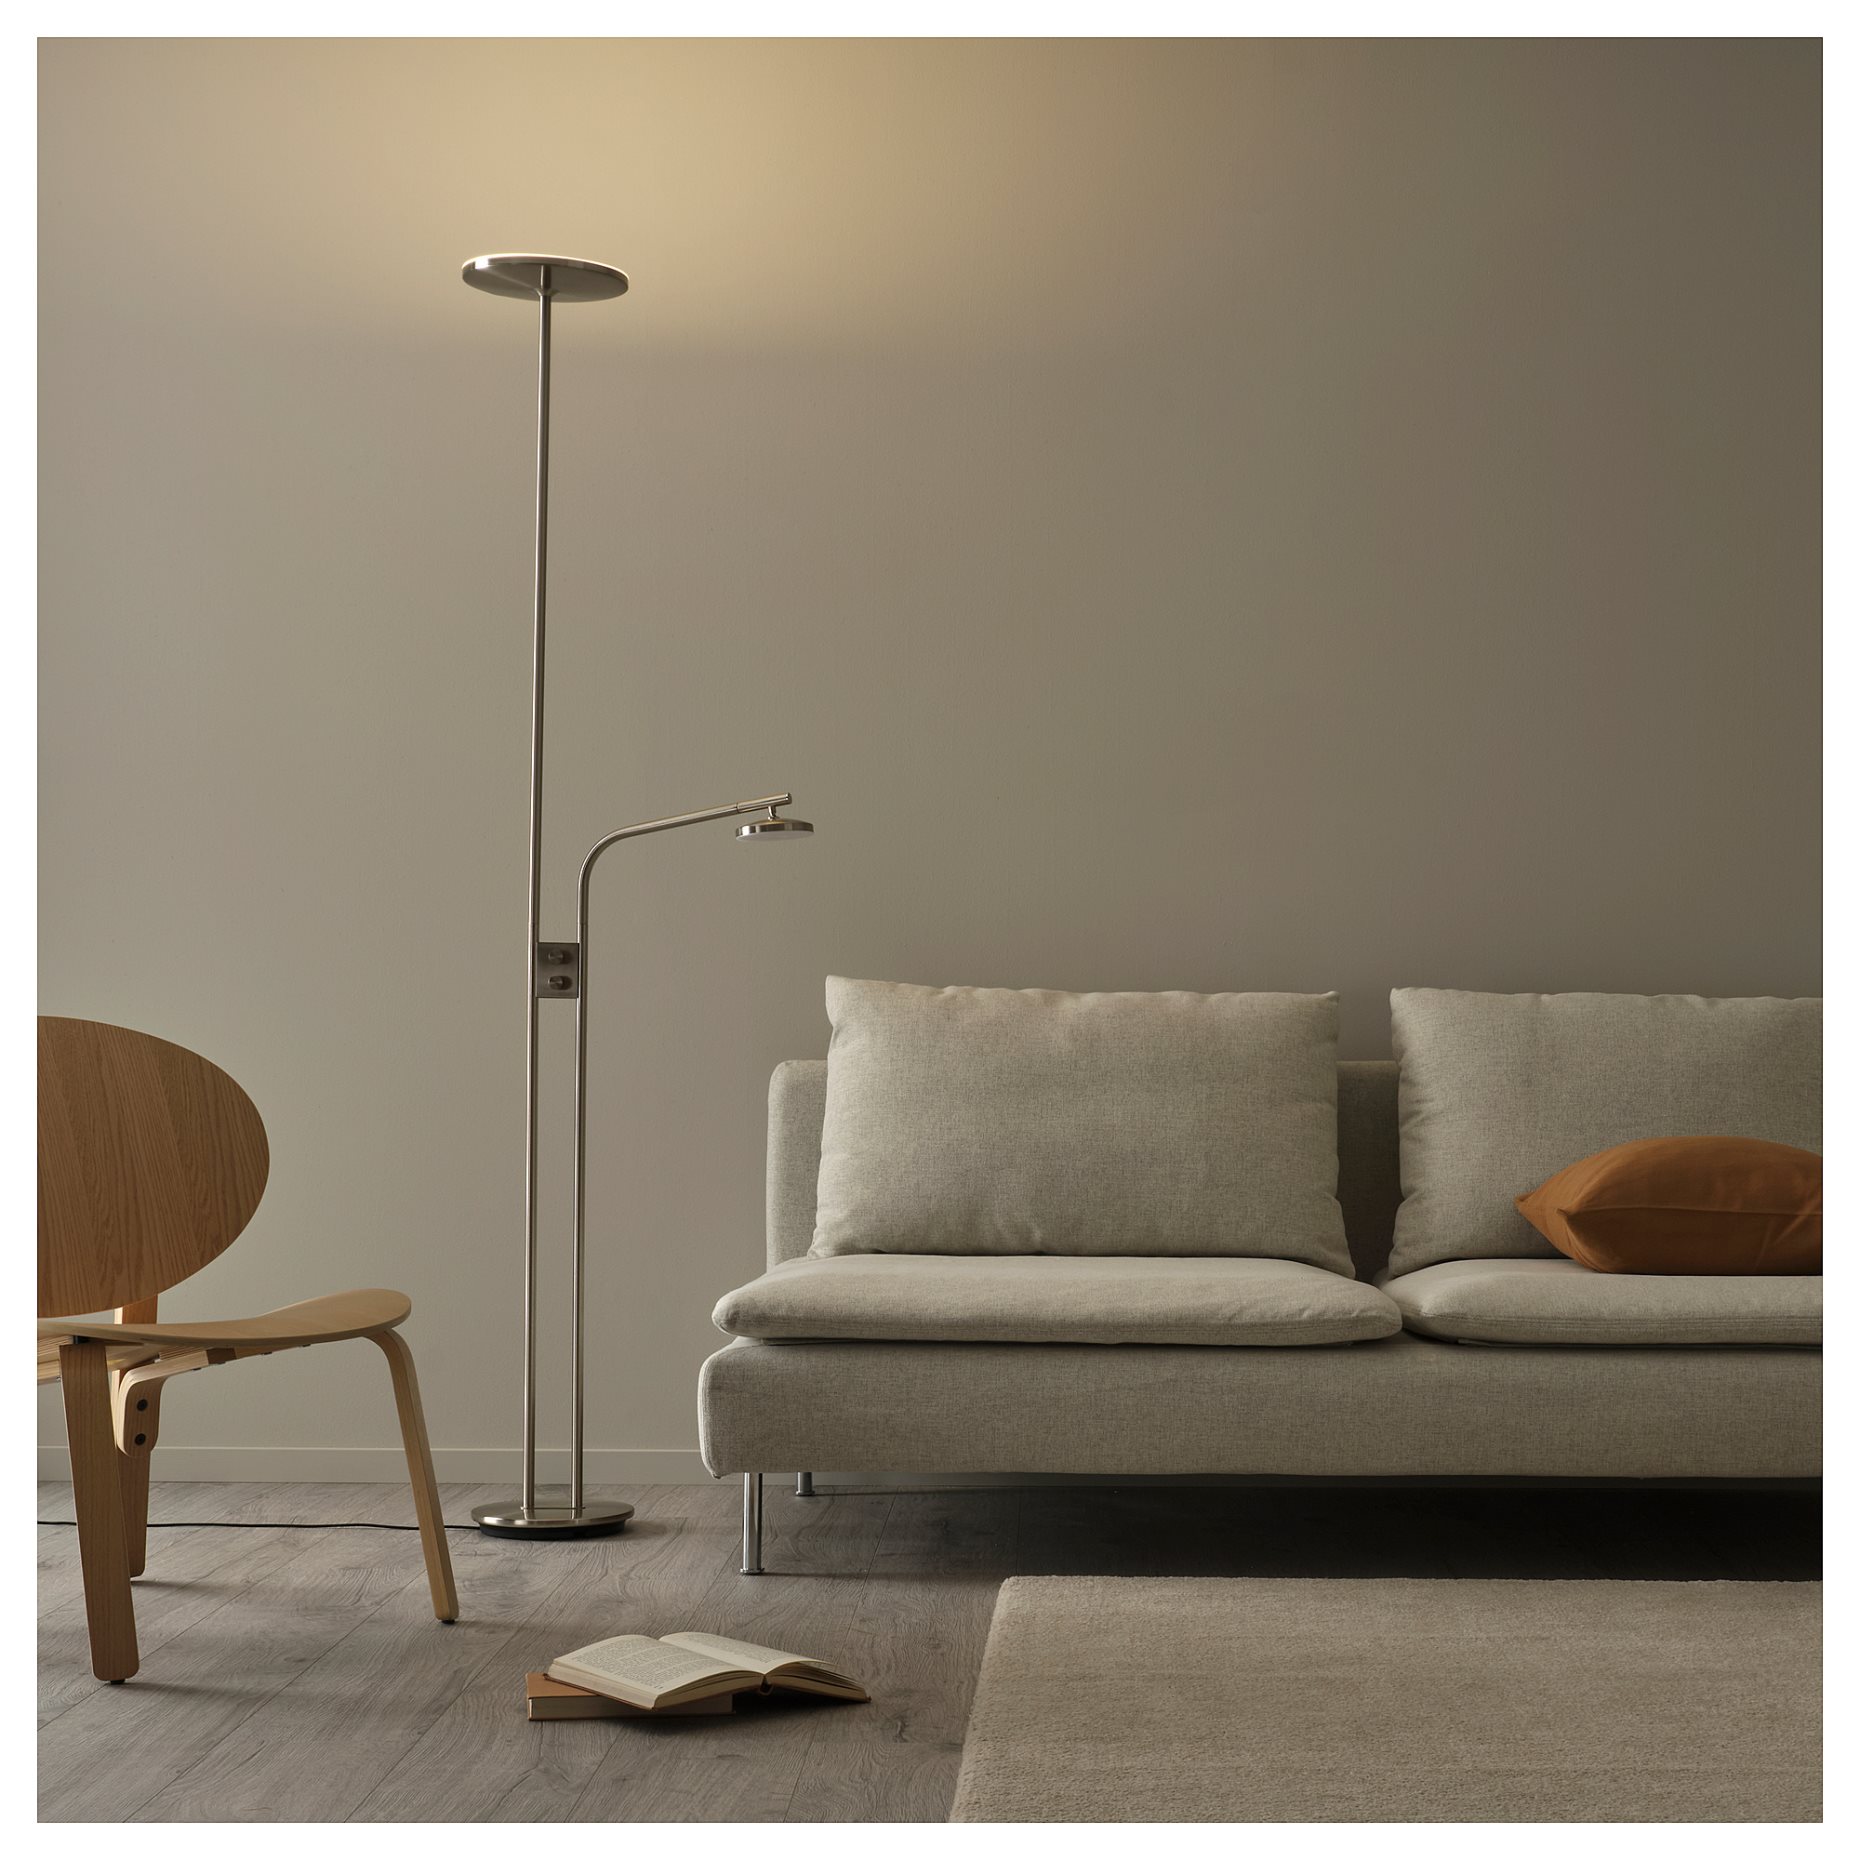 ISJAKT, floor uplighter/reading lamp dimmable with built-in LED light source, 180 cm, 404.597.08